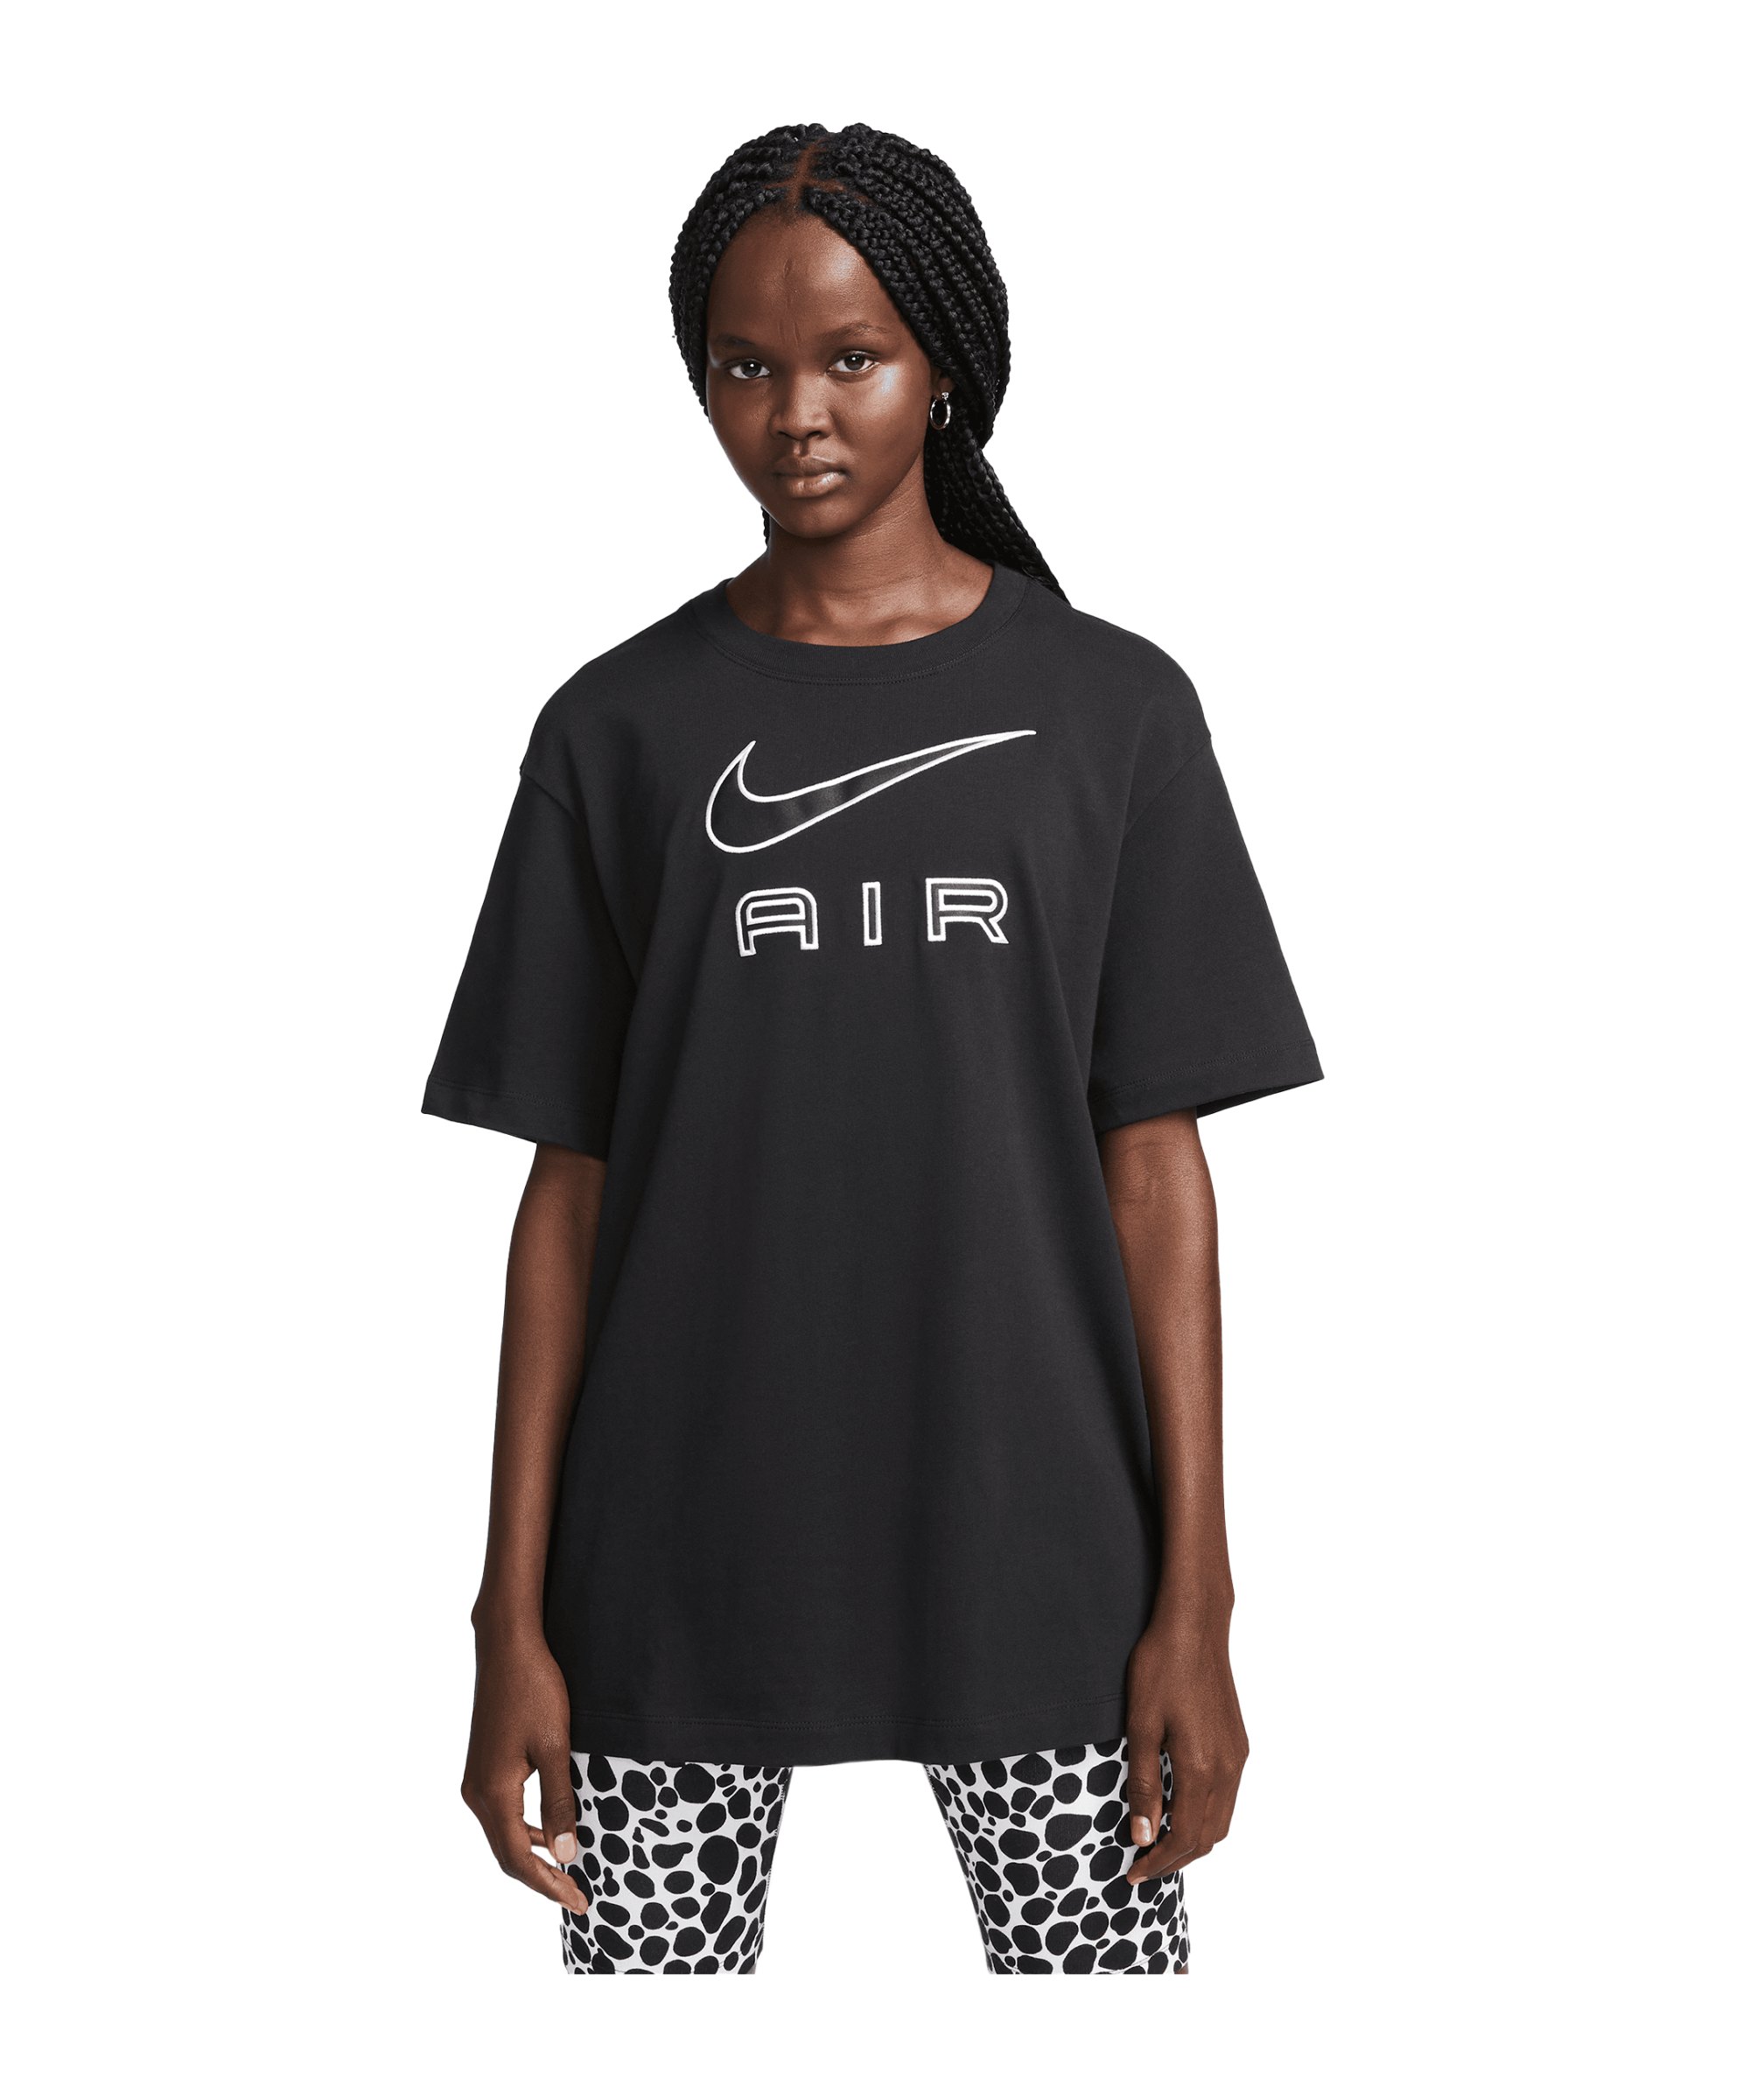 Nike Air T-Shirt Damen Schwarz Weiss F010 - schwarz